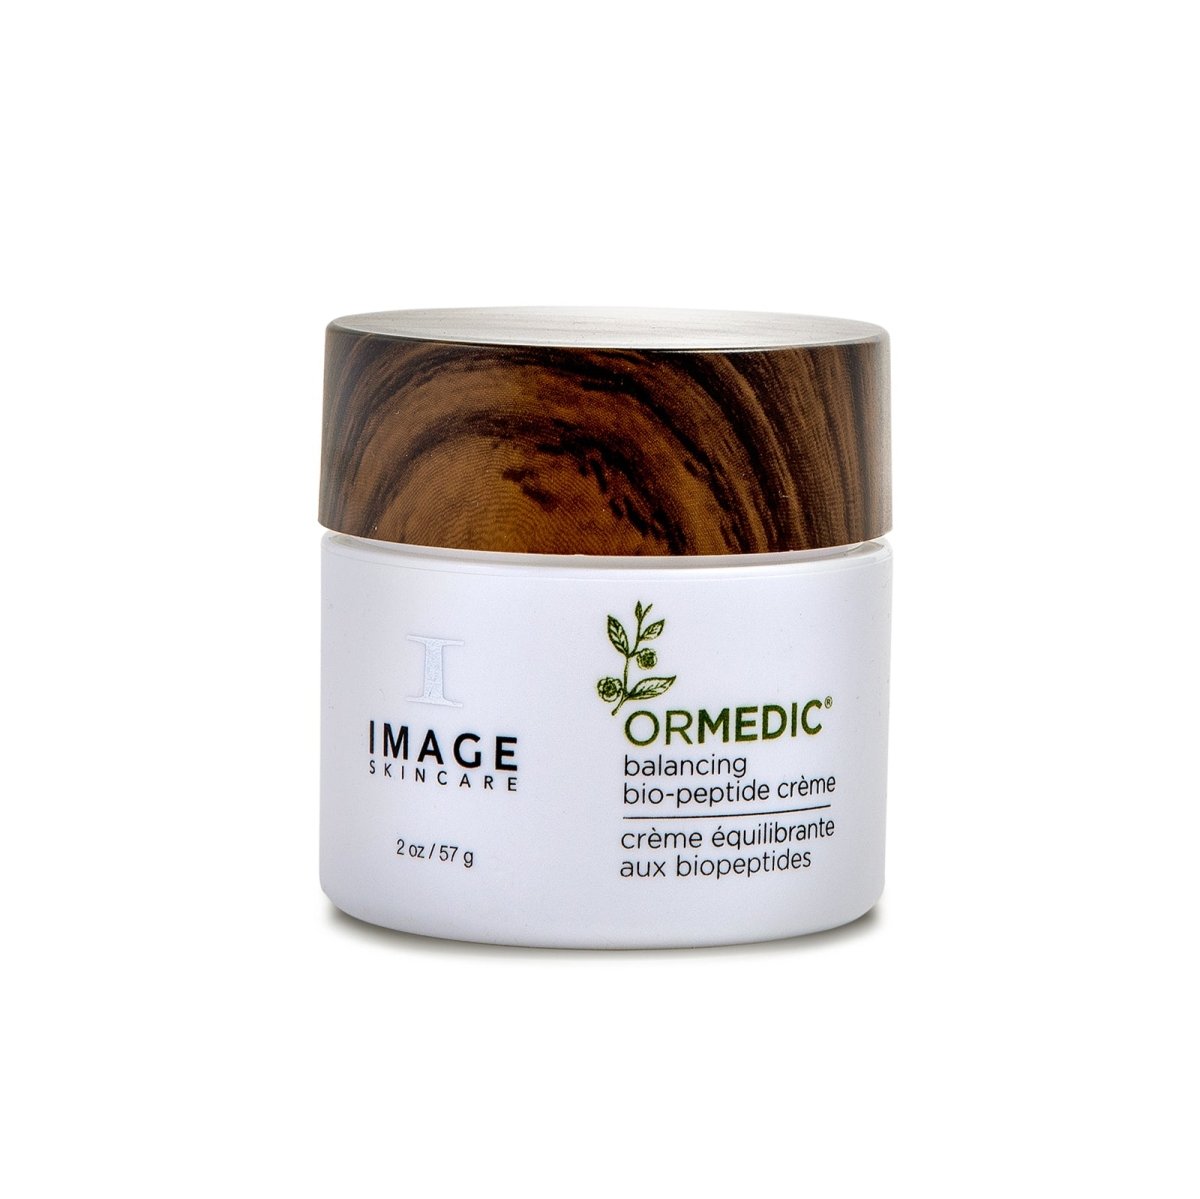 IMAGE Skincare ORMEDIC® Balancing Biopeptide Crème - SkincareEssentials